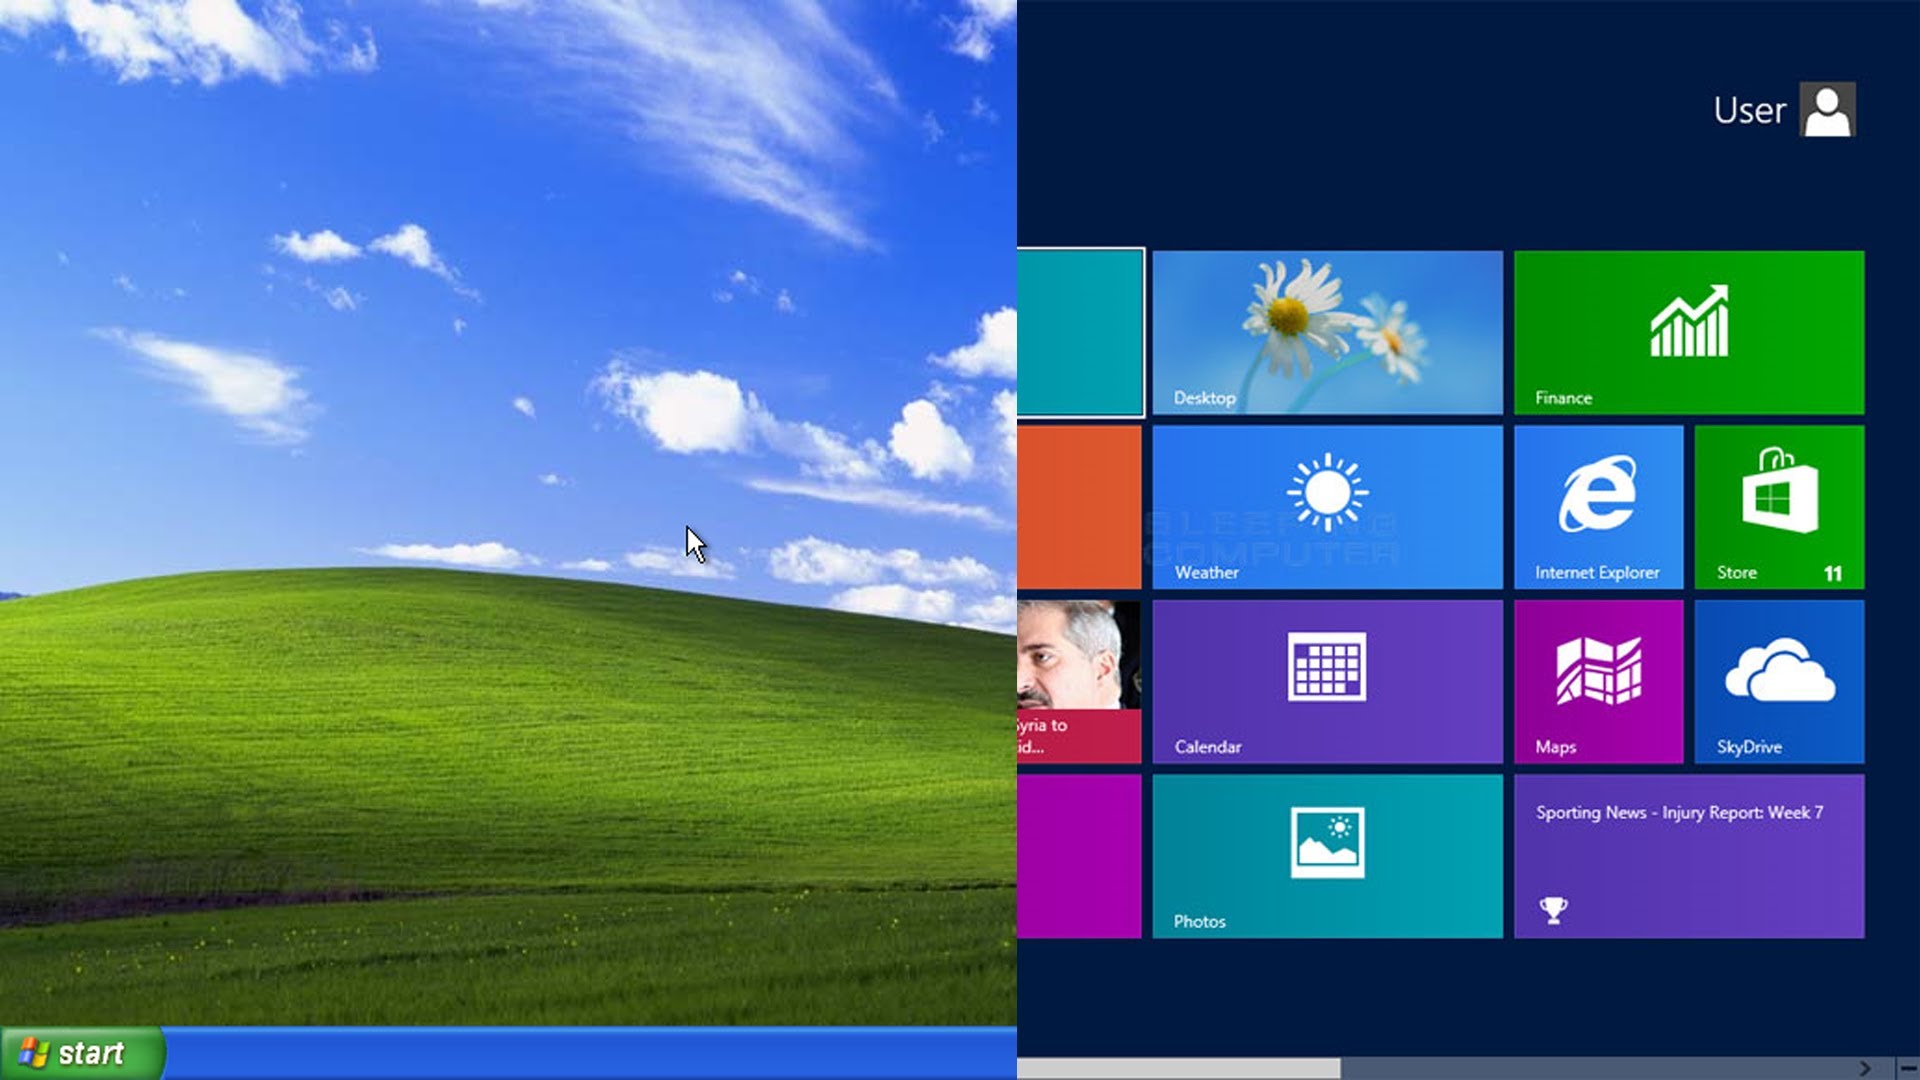 Windows XP HD wallpapers, Desktop wallpaper - most viewed